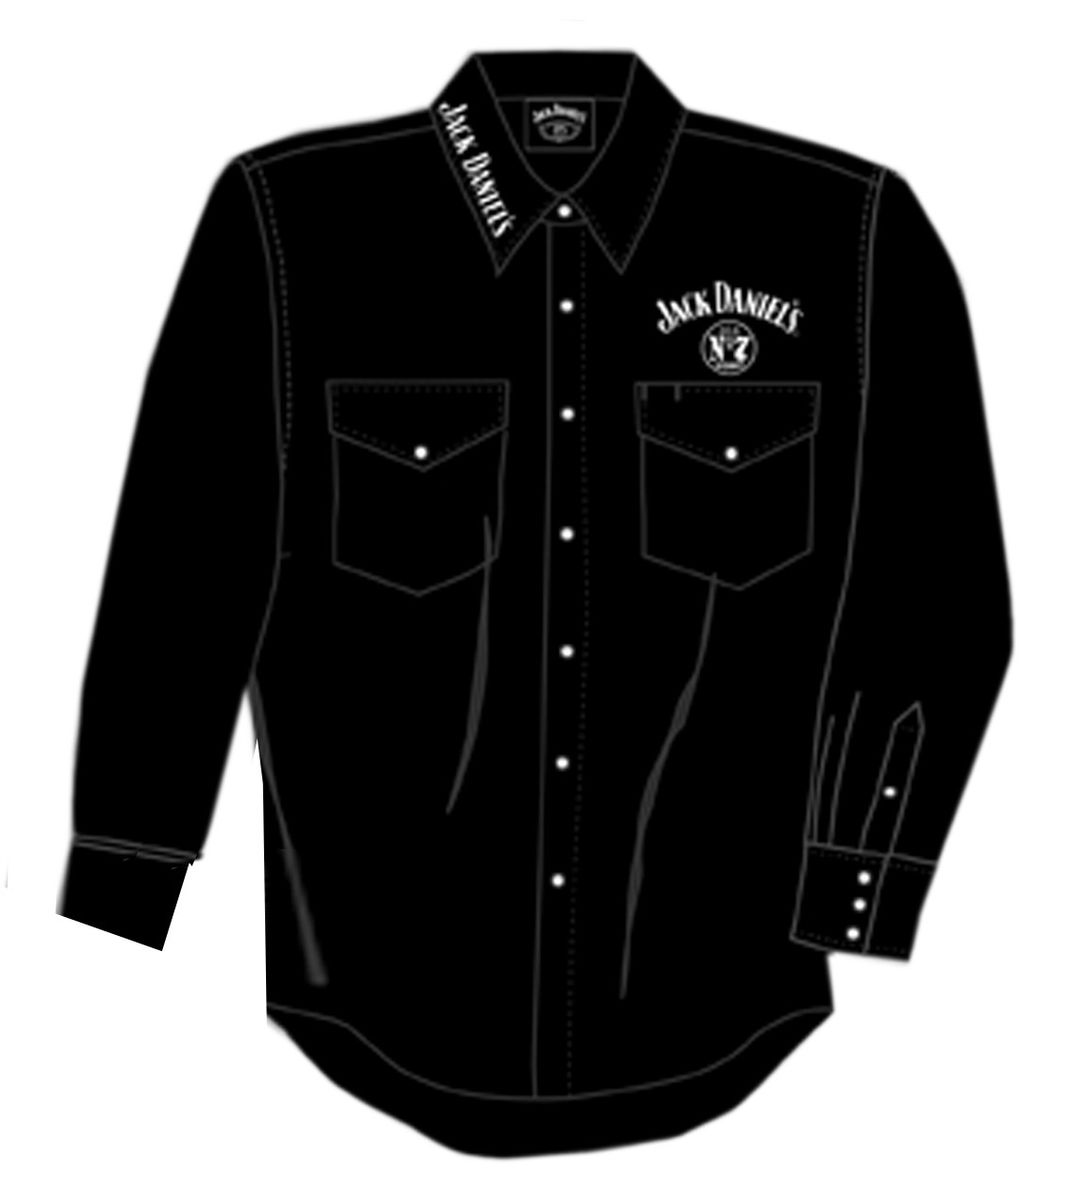 Cowboyskjorte Størrelse M-XXL, varenummer: Jack Daniels style 10, pris:890,-